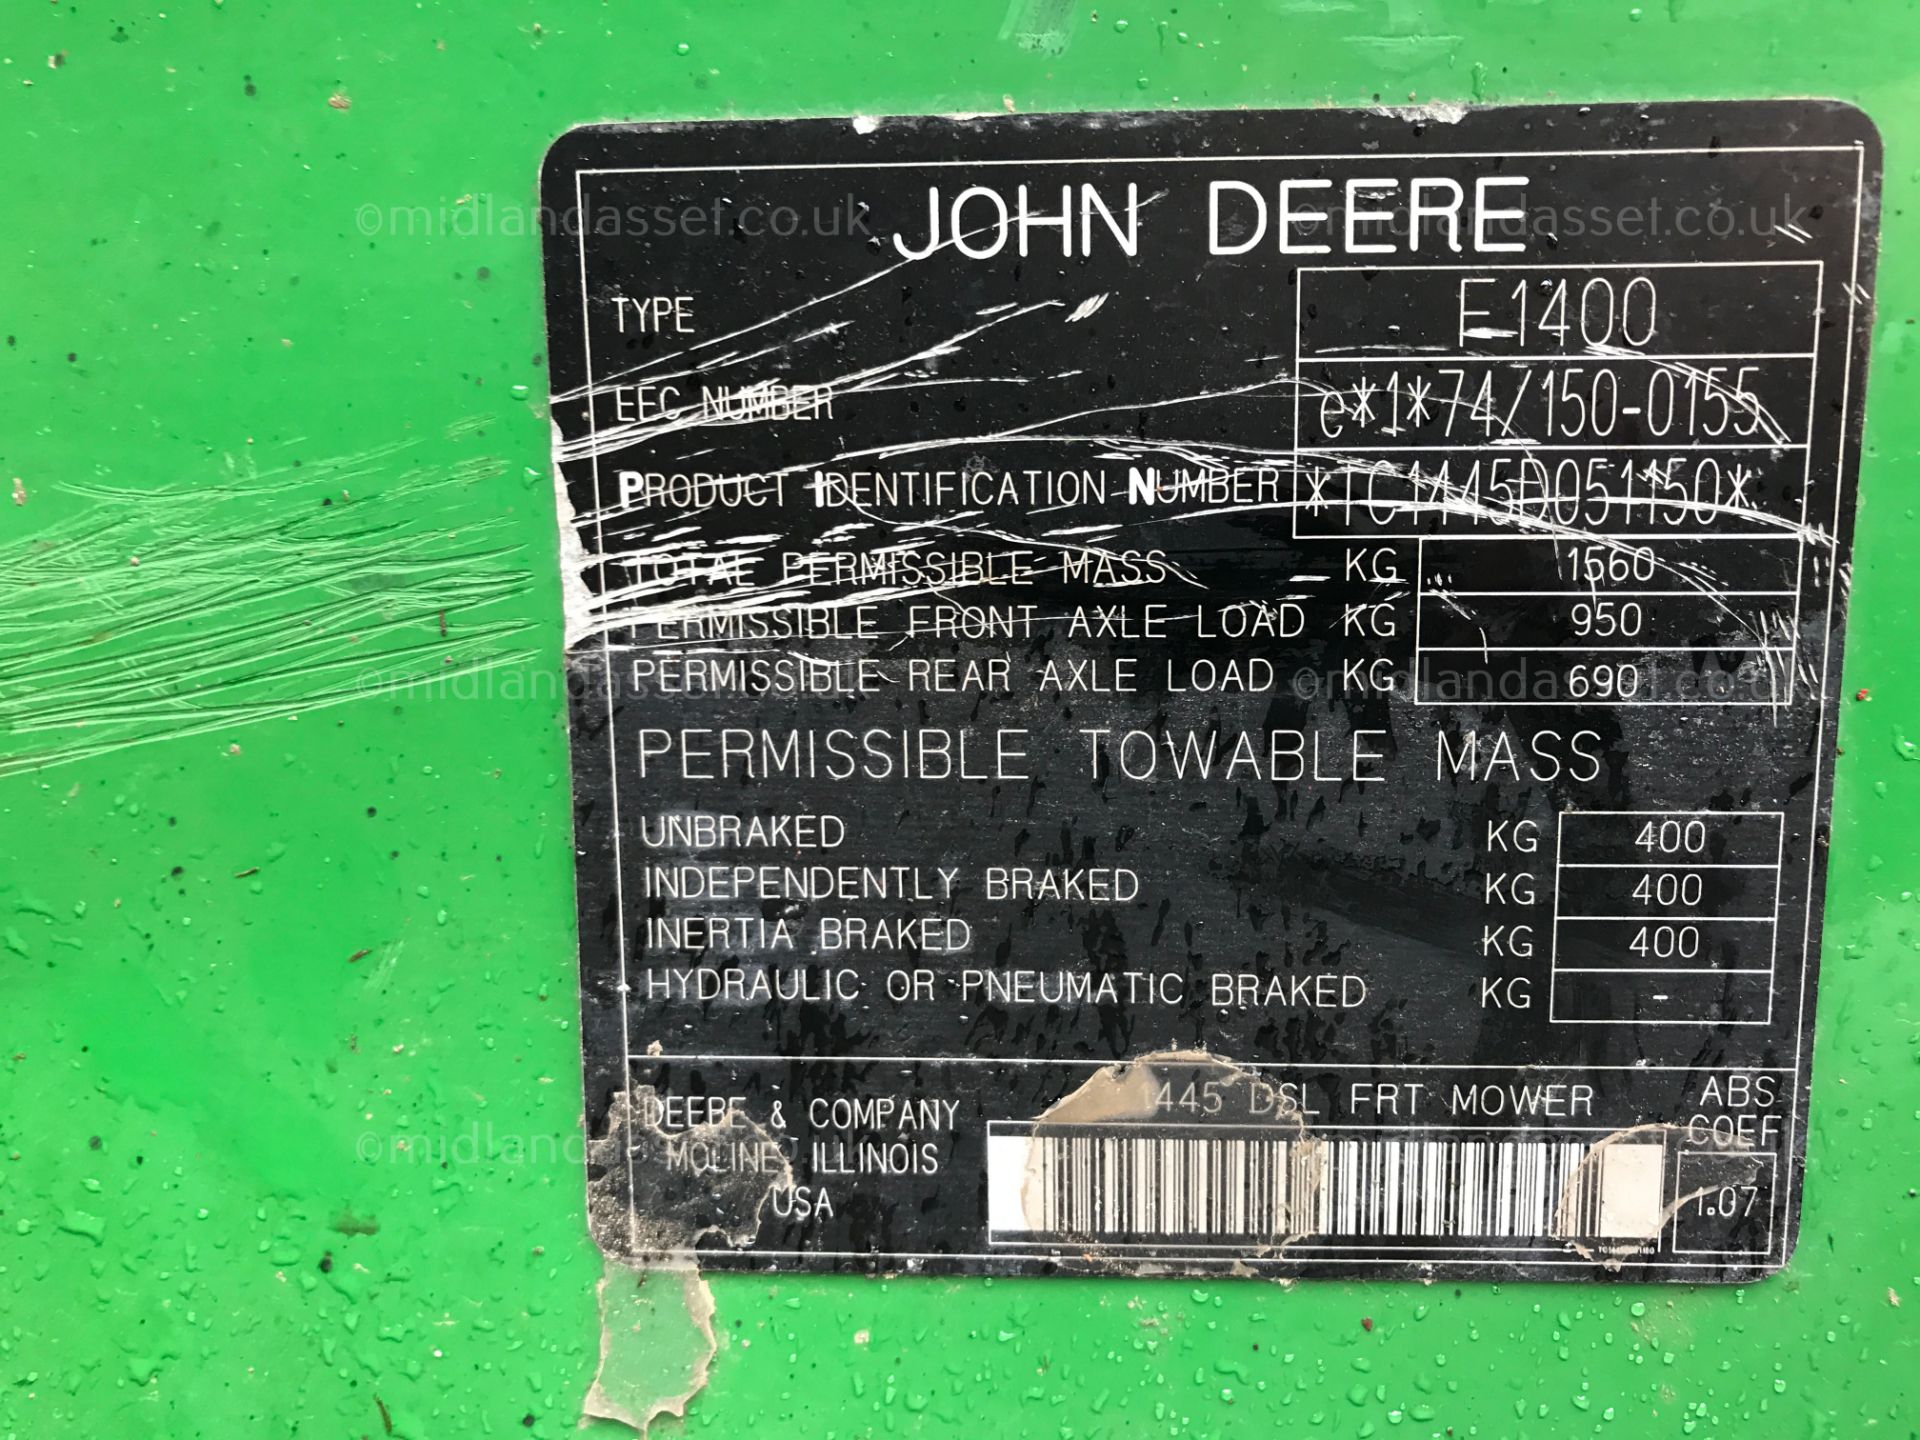 2008 JOHN DEERE FASTBAC RIDE ON MOWER - Image 5 of 9